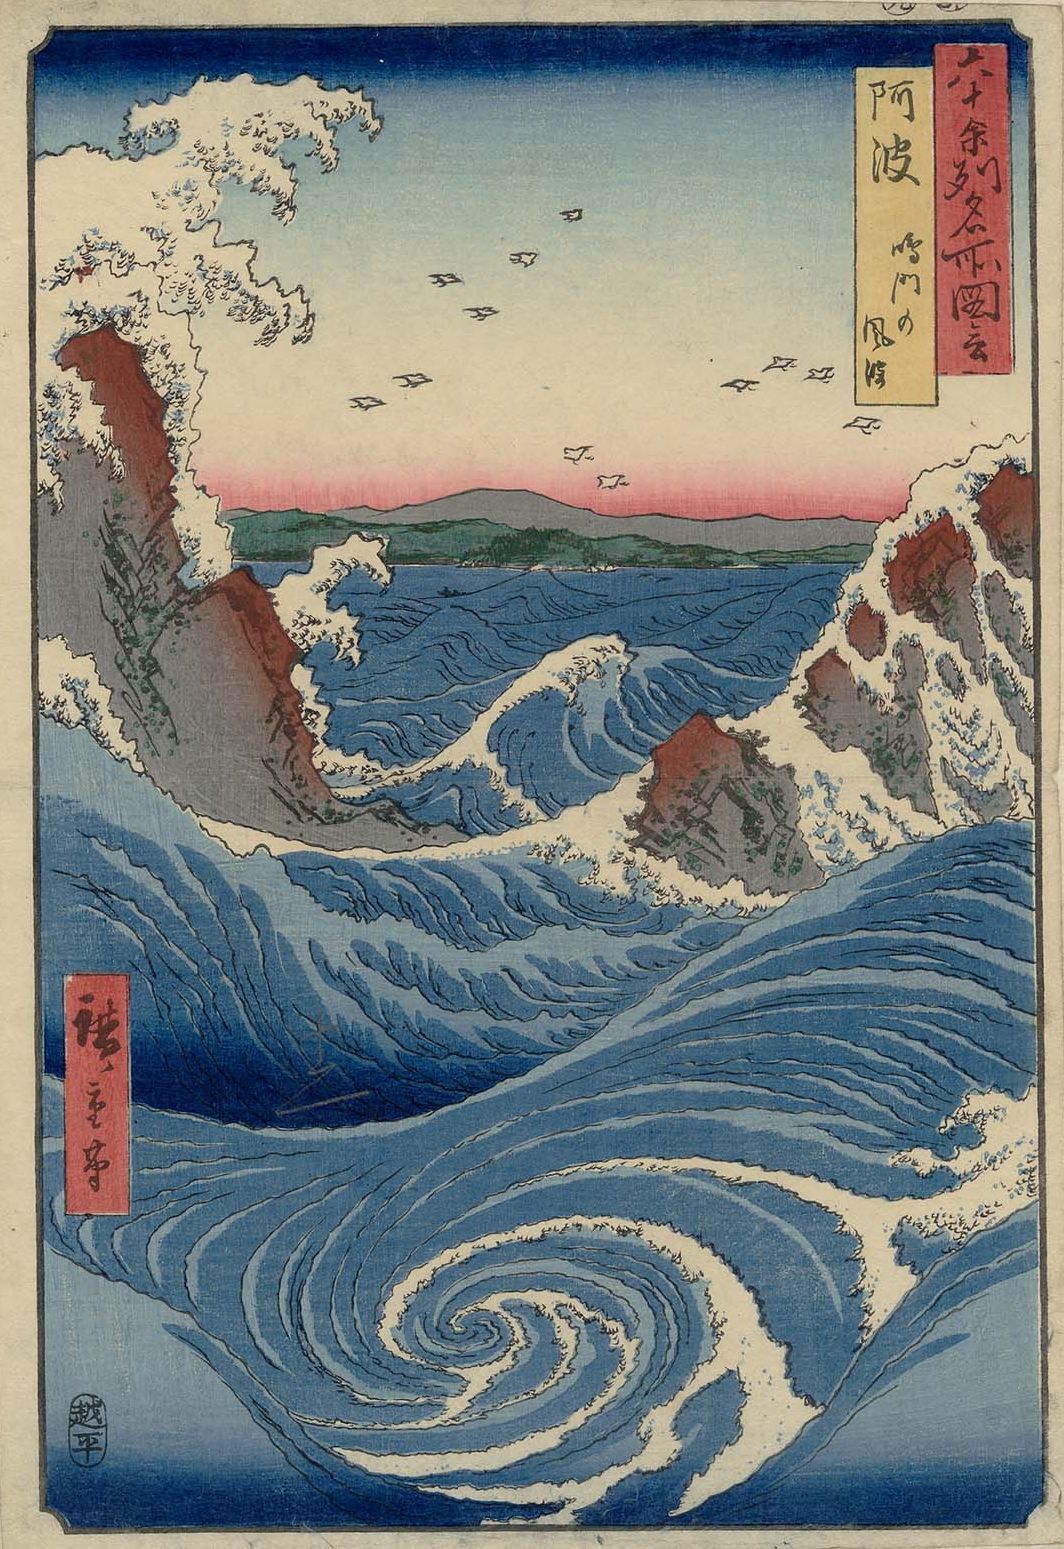 Водоворот Наруто by  Хиросигэ - 1856 г. - 35,6 × 24,4 см 